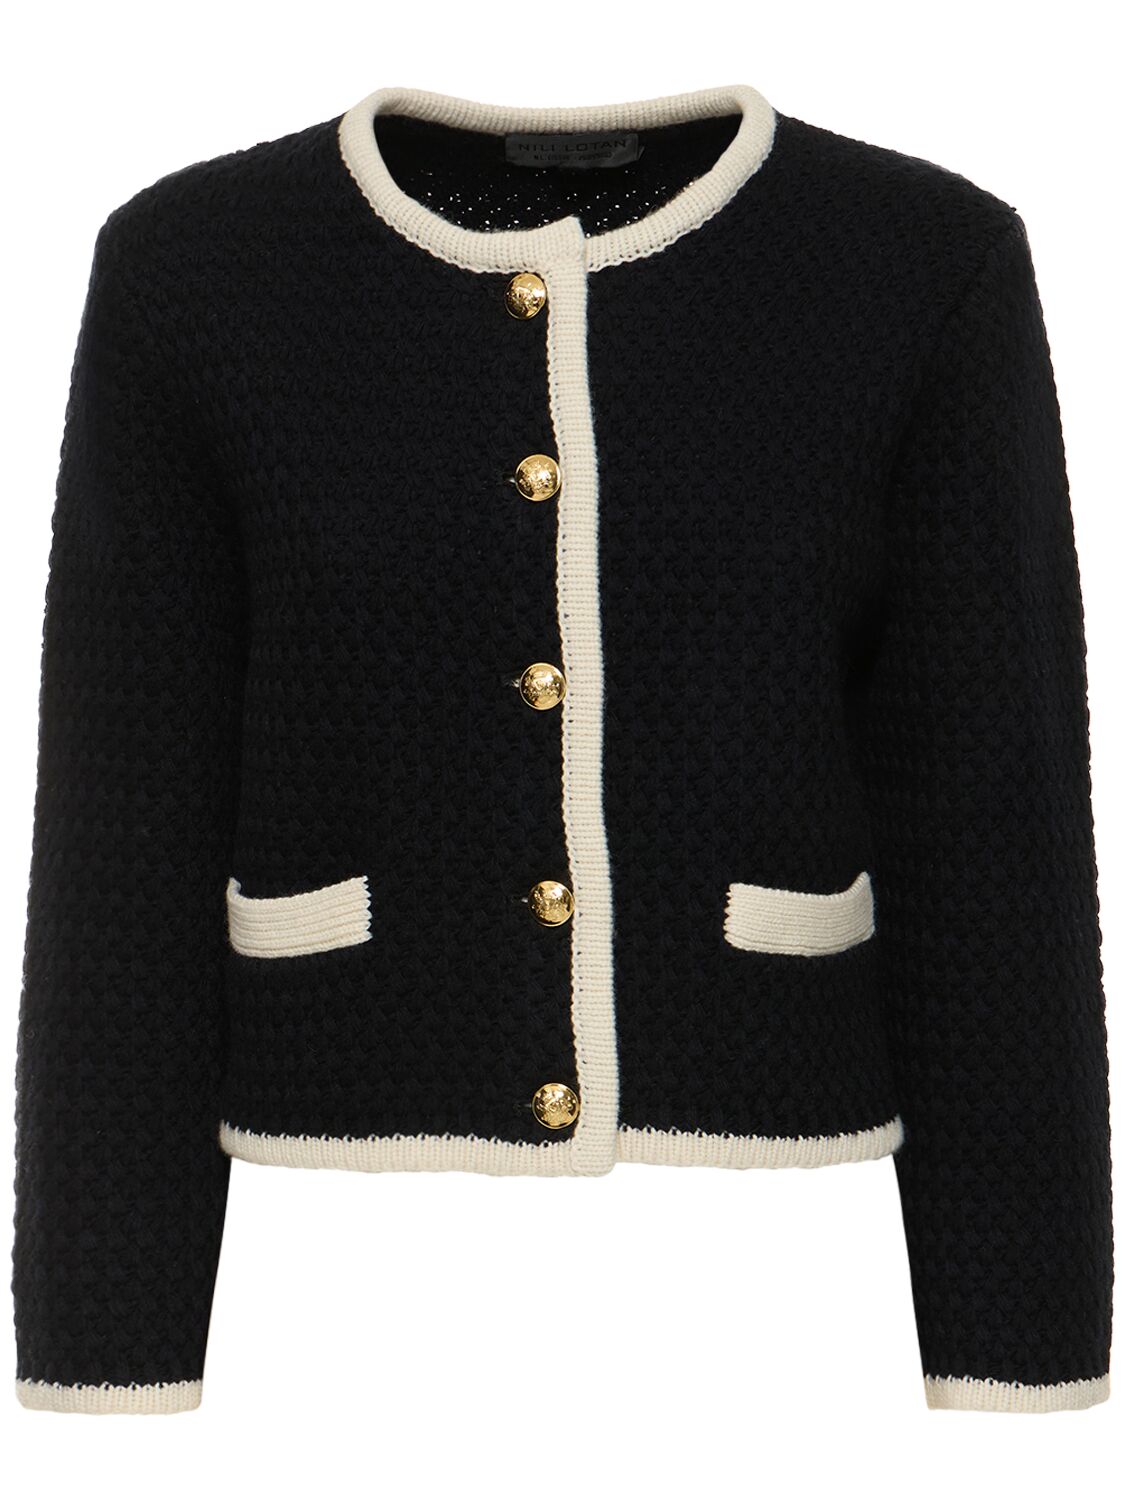 Navy Poppy cashmere sweater, Nili Lotan